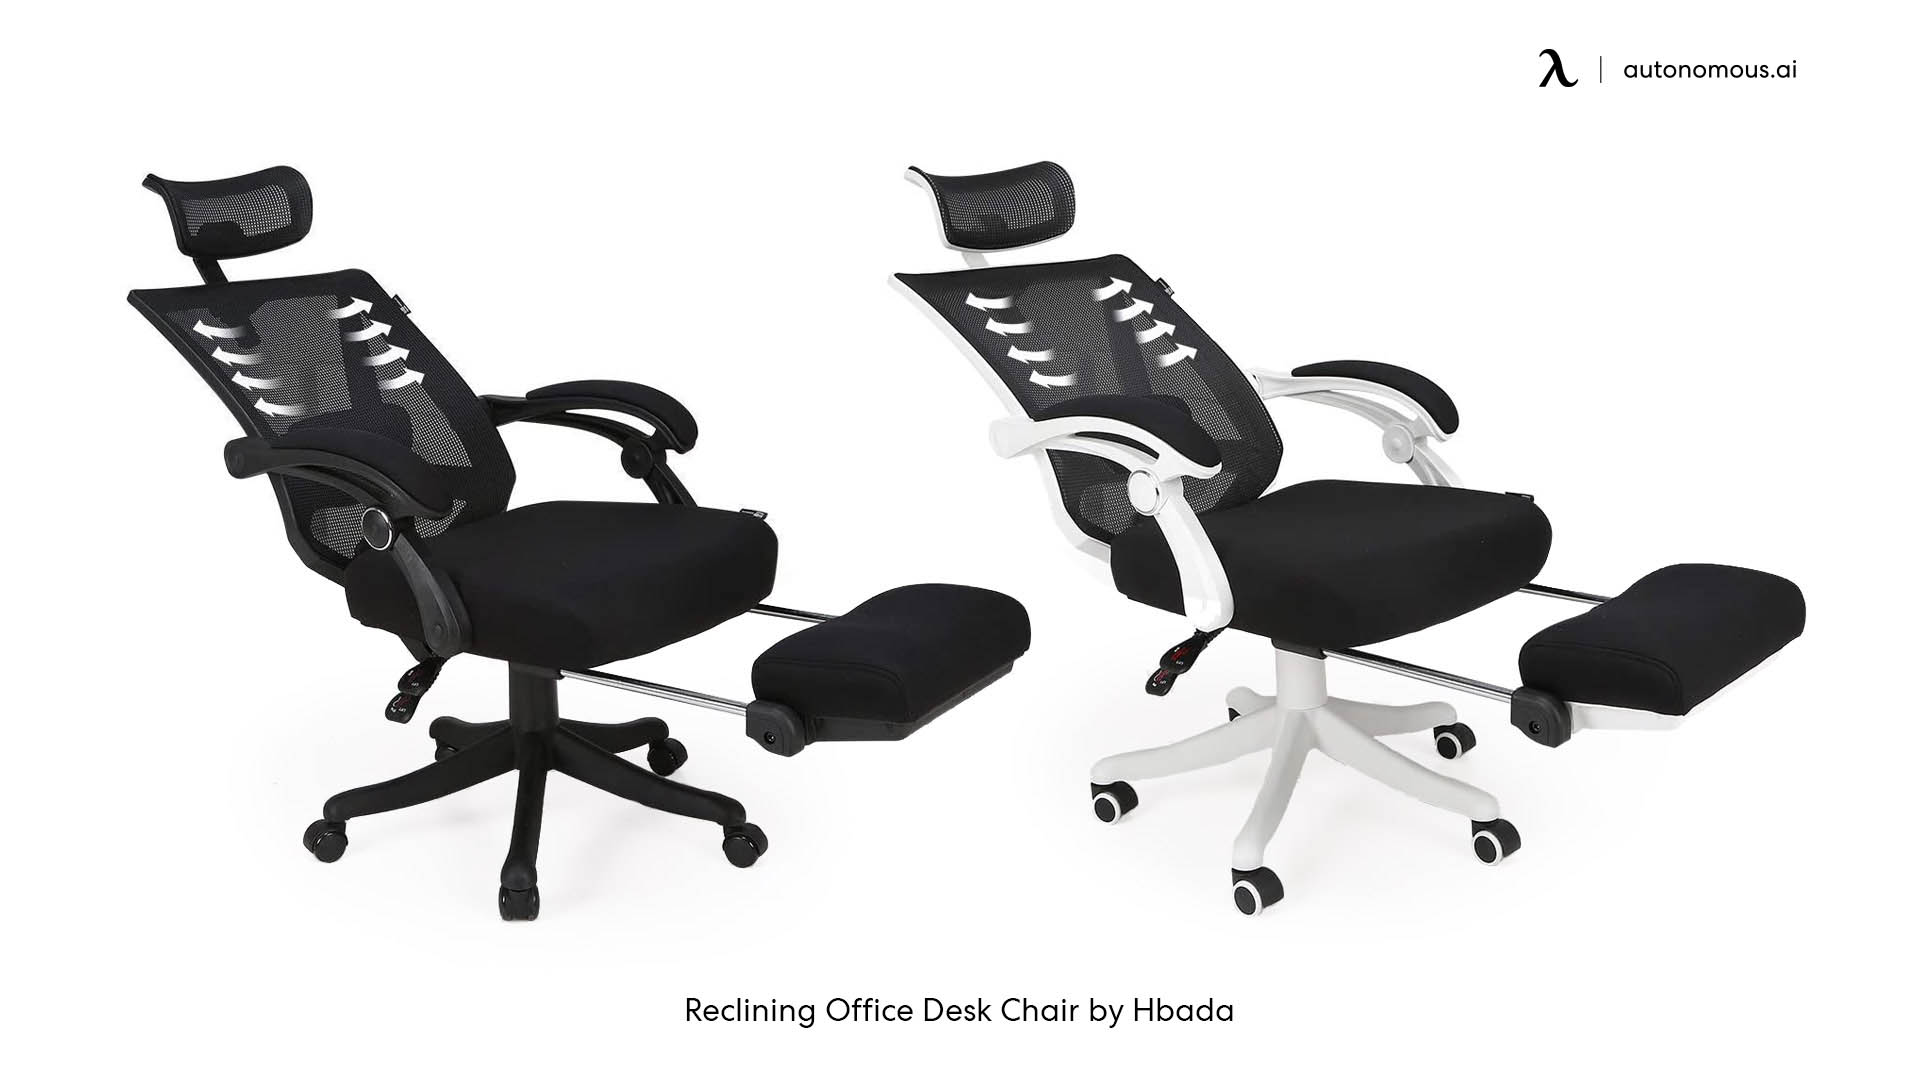 Reclining Office Desk Chair by Hbada